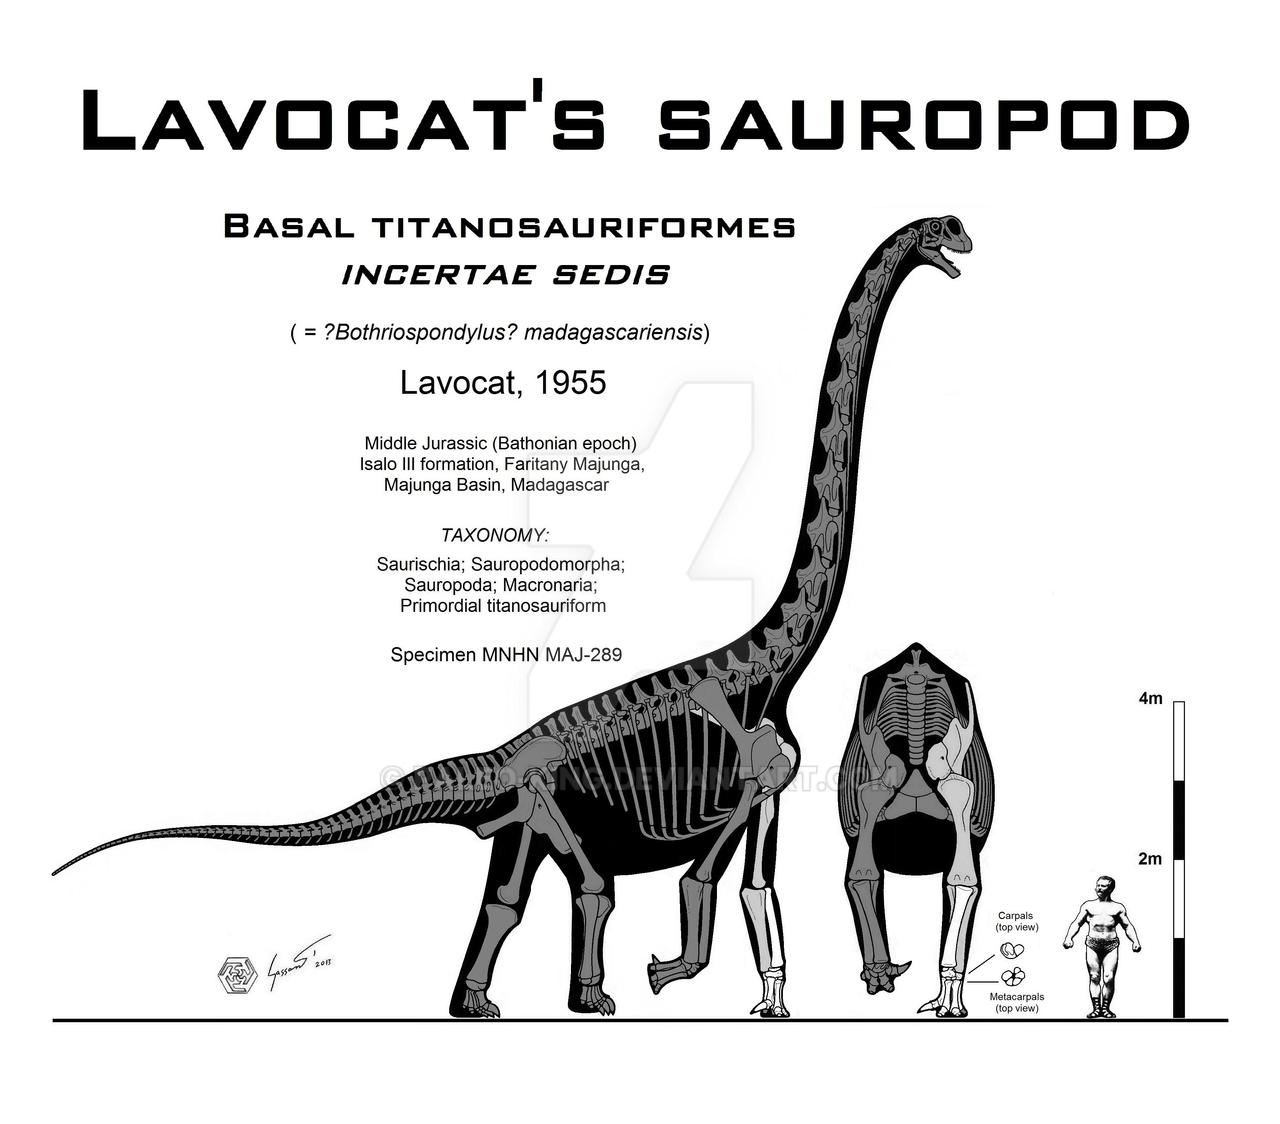 Lavocat's Sauropod